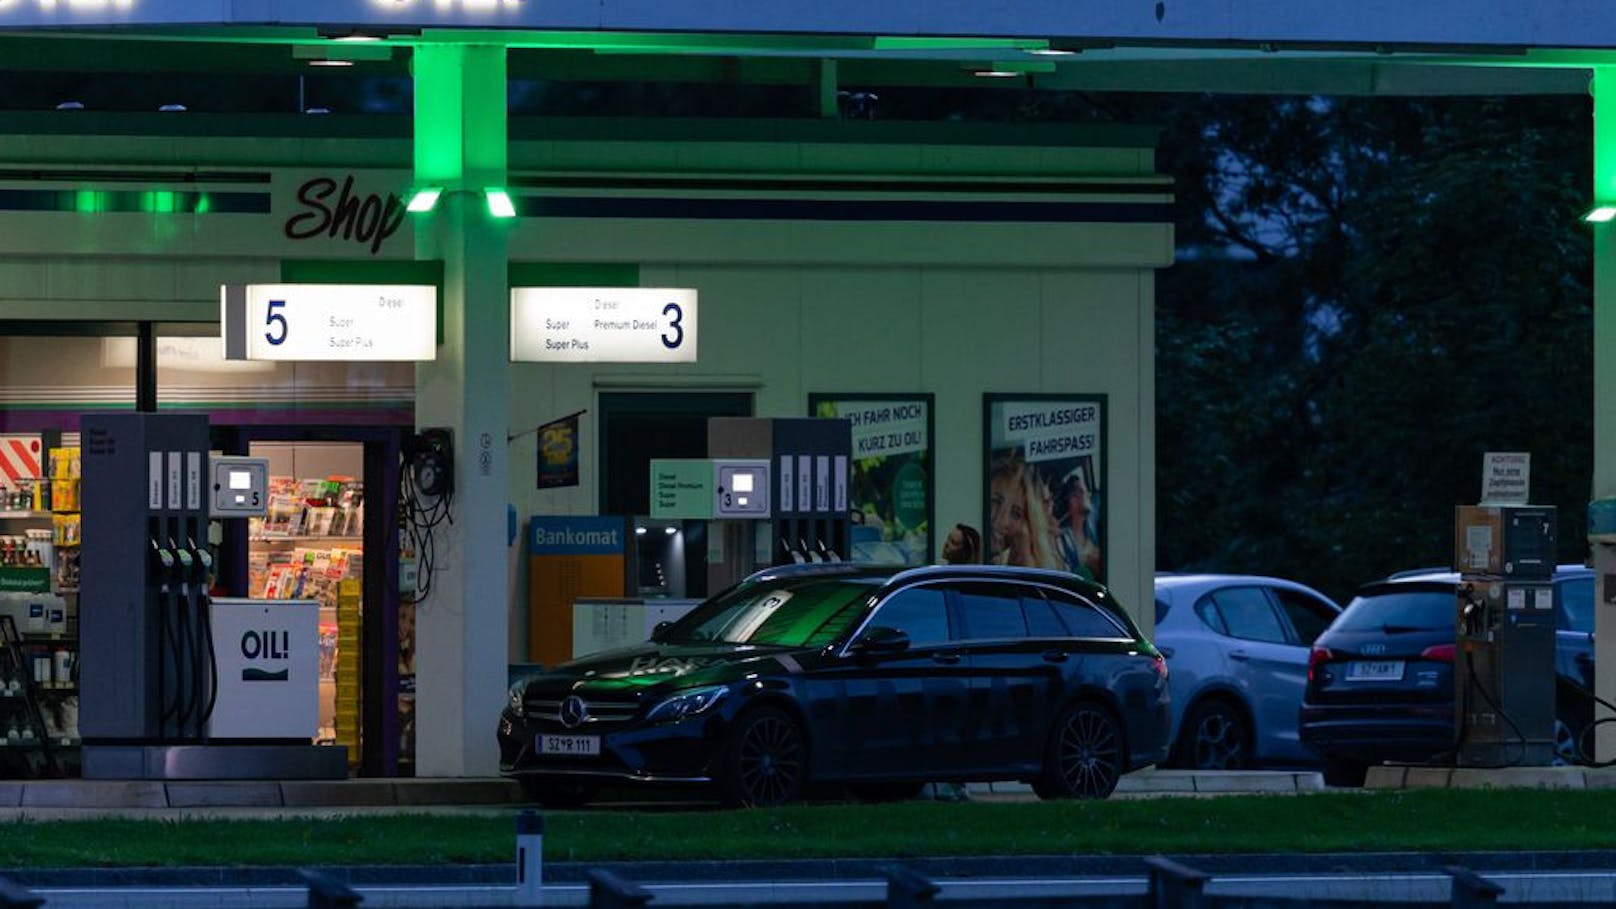 "Störenfried" bei Tankstelle bricht Polizisten Rippe